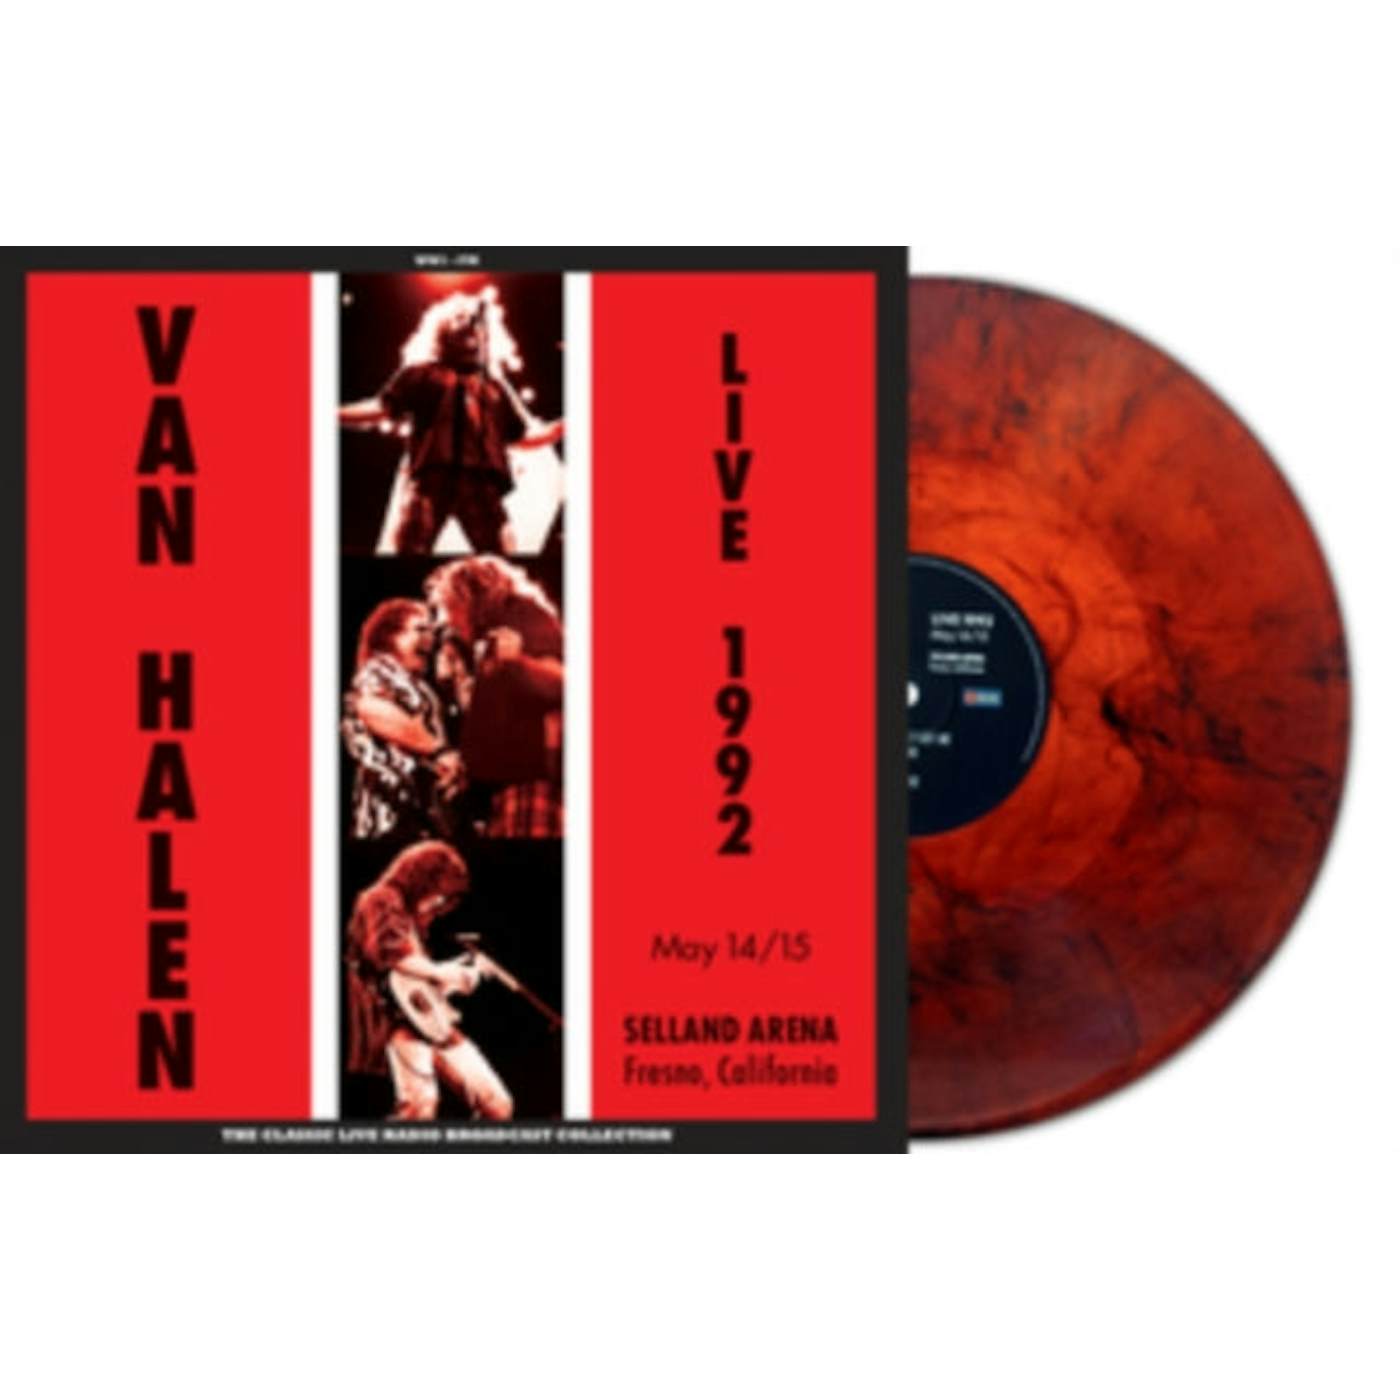 Van Halen LP Vinyl Record - Live At Selland Arena Fresno 19 92 (Red Marble Vinyl)